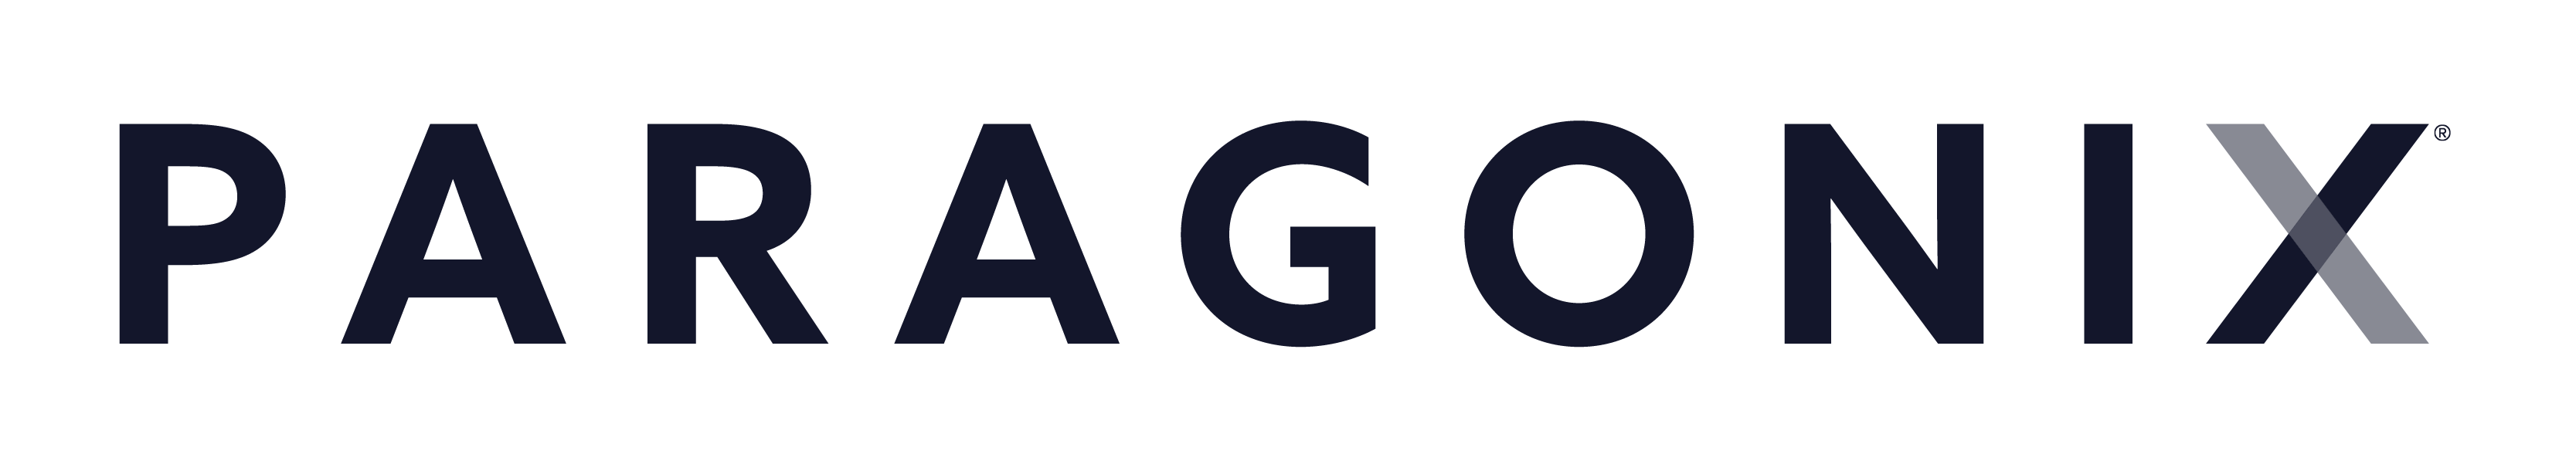 Paragonix-Logo-Dark-Blue-01